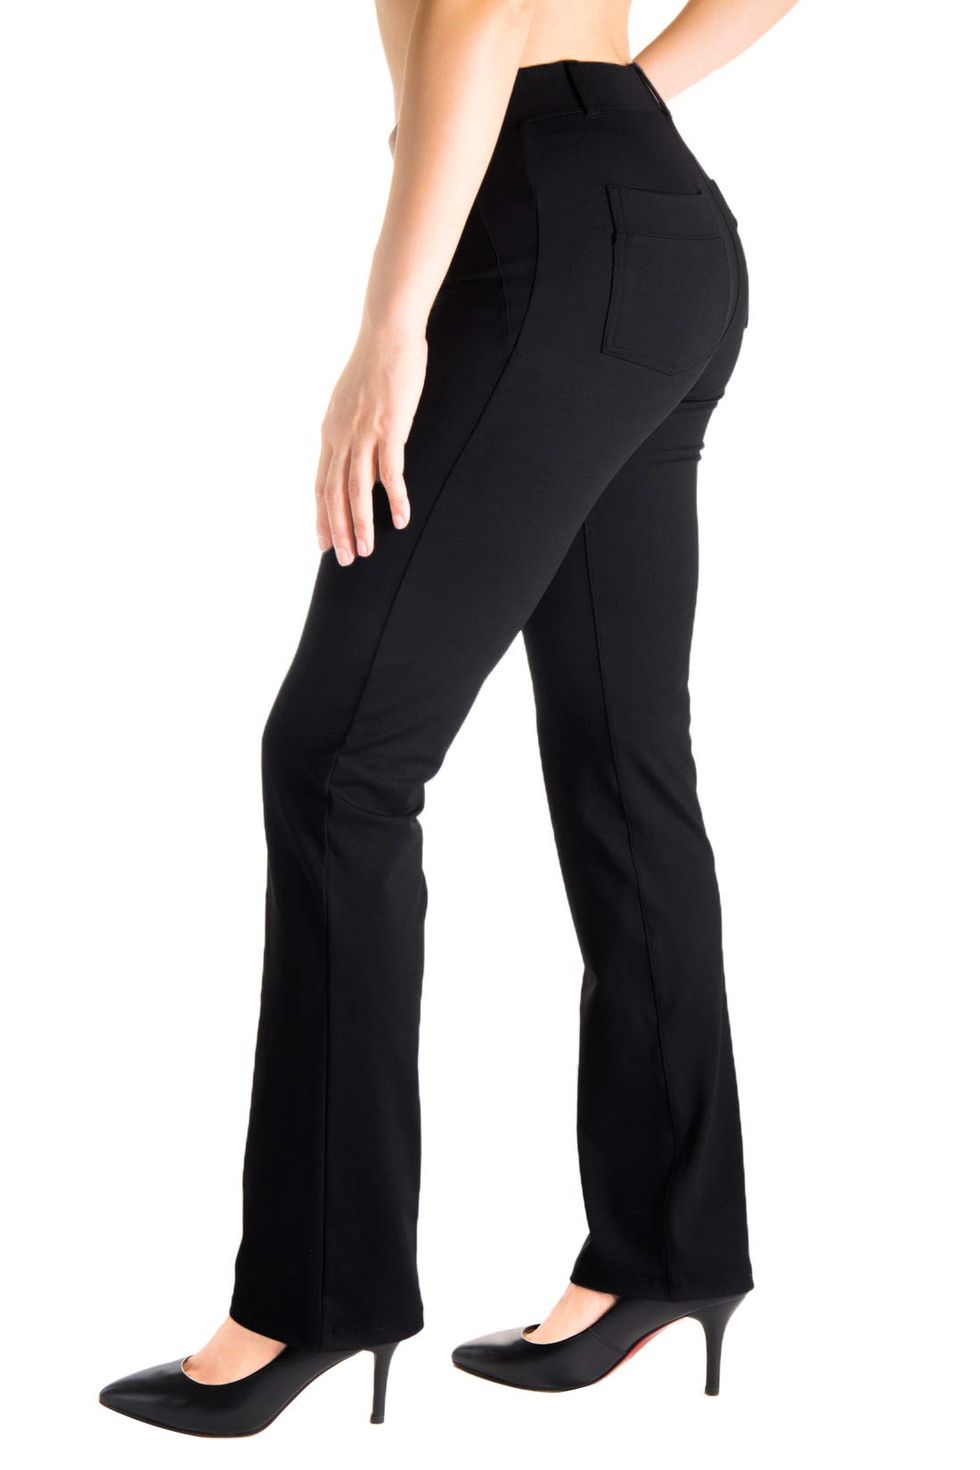 Black Women's XL Ginasy Dress Pants Business Casual Leggings